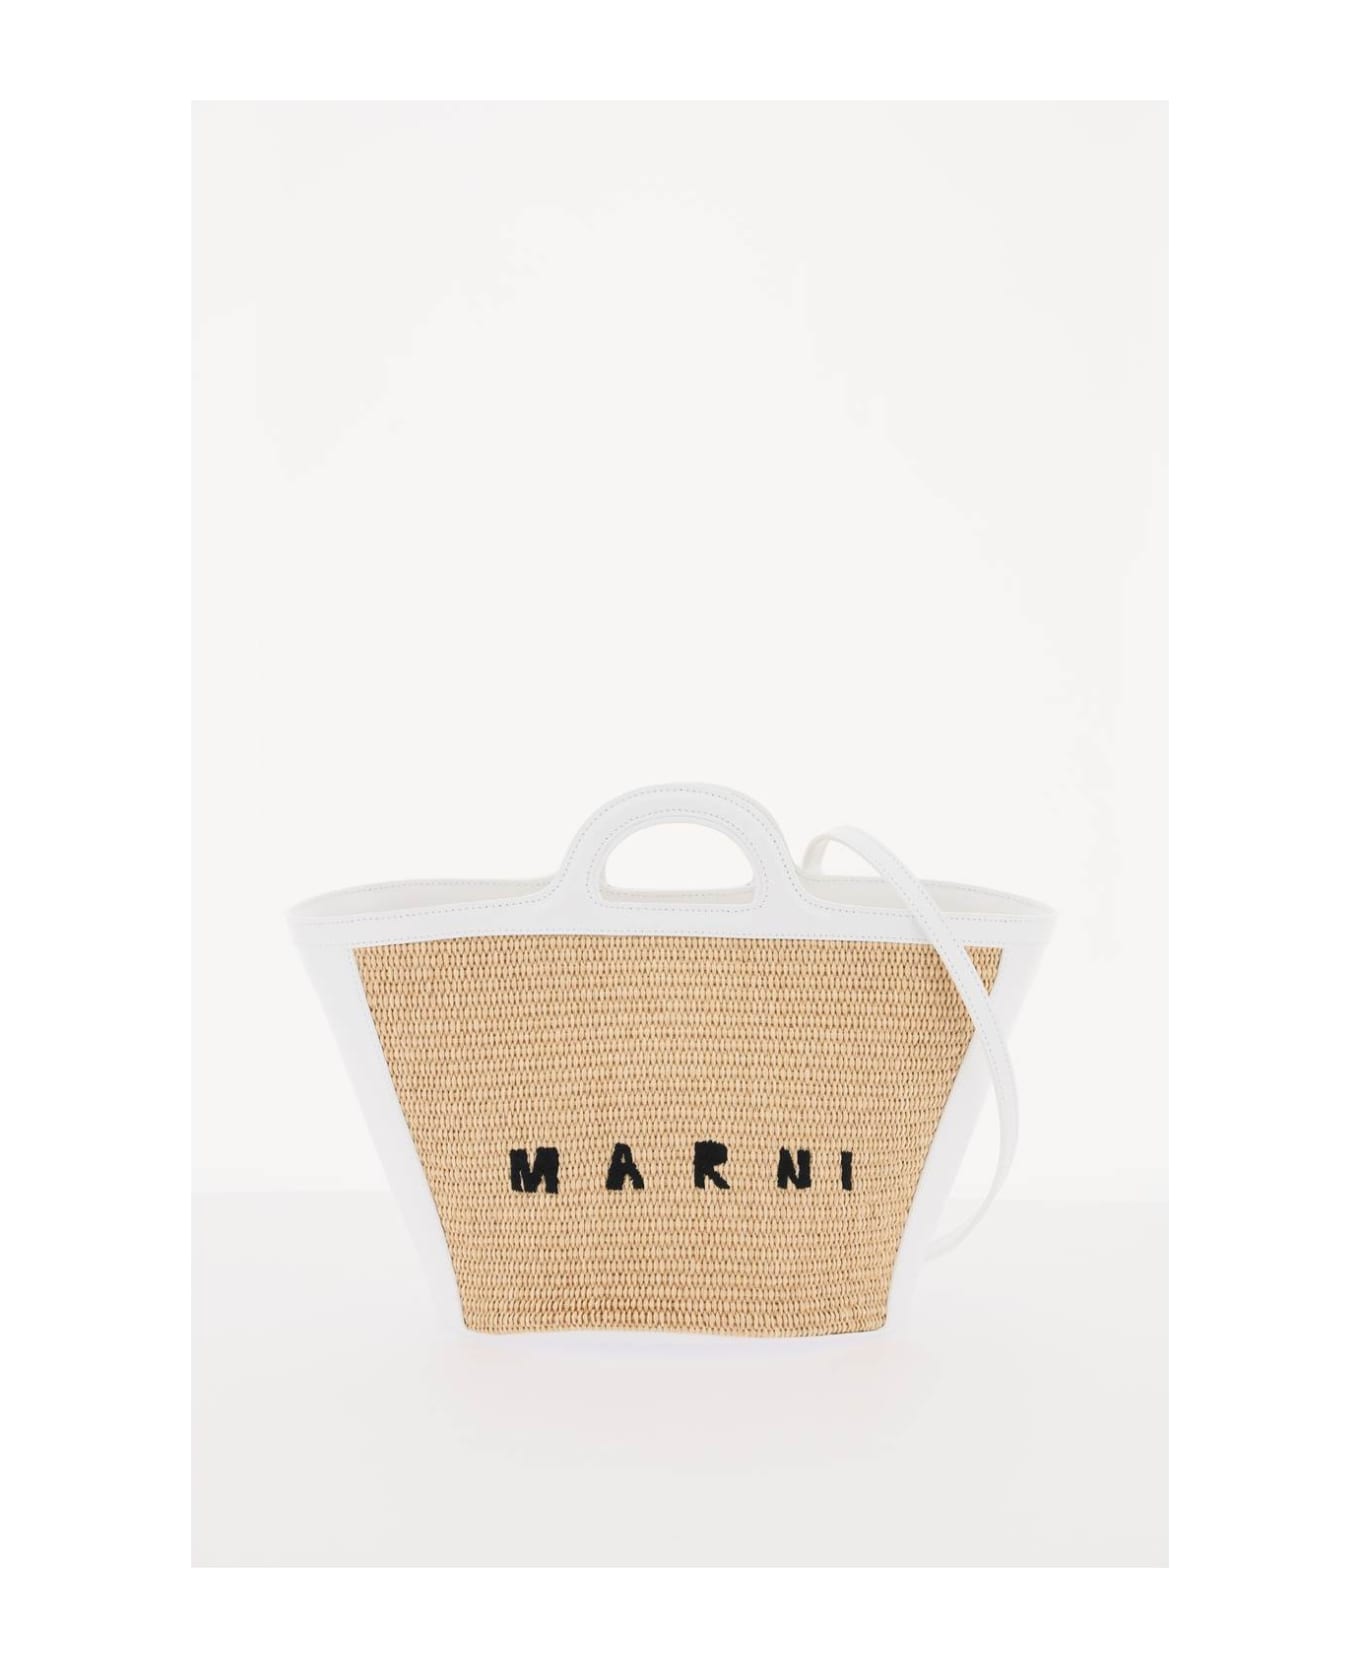 Marni Small Tropicalia Summer Bag In White Leather And Natural Raffia - White/beige トートバッグ